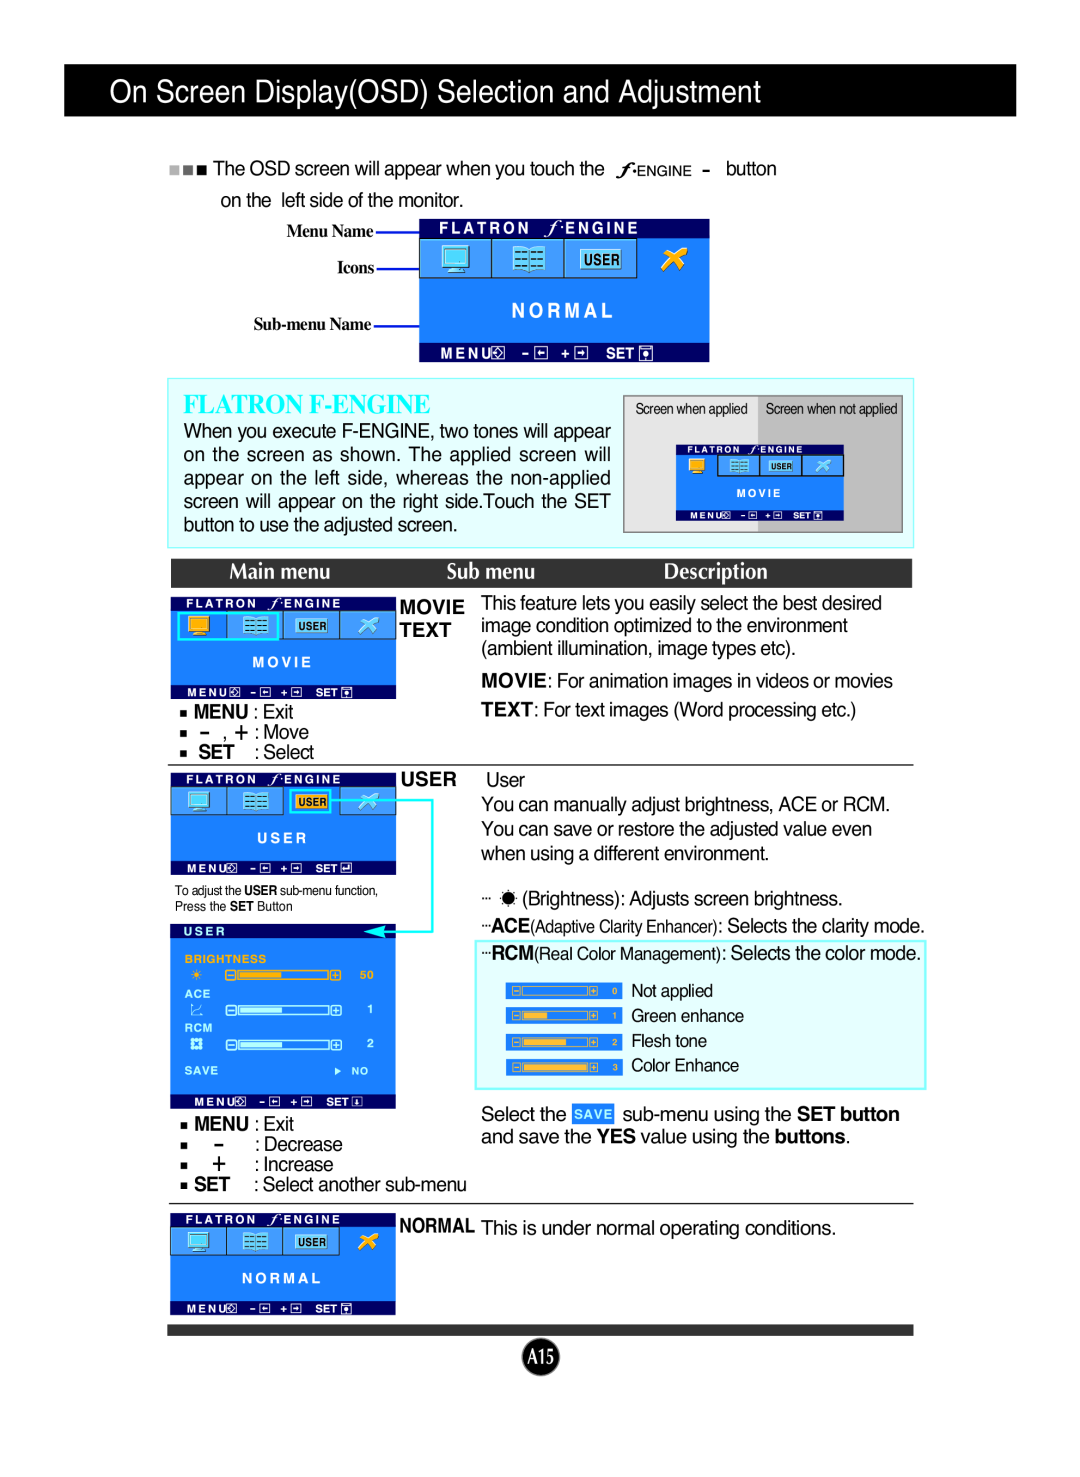 LG Electronics L227WTP On Screen DisplayOSD Selection and Adjustment, Flatron F-Engine, Main menu, Sub menu, Description 